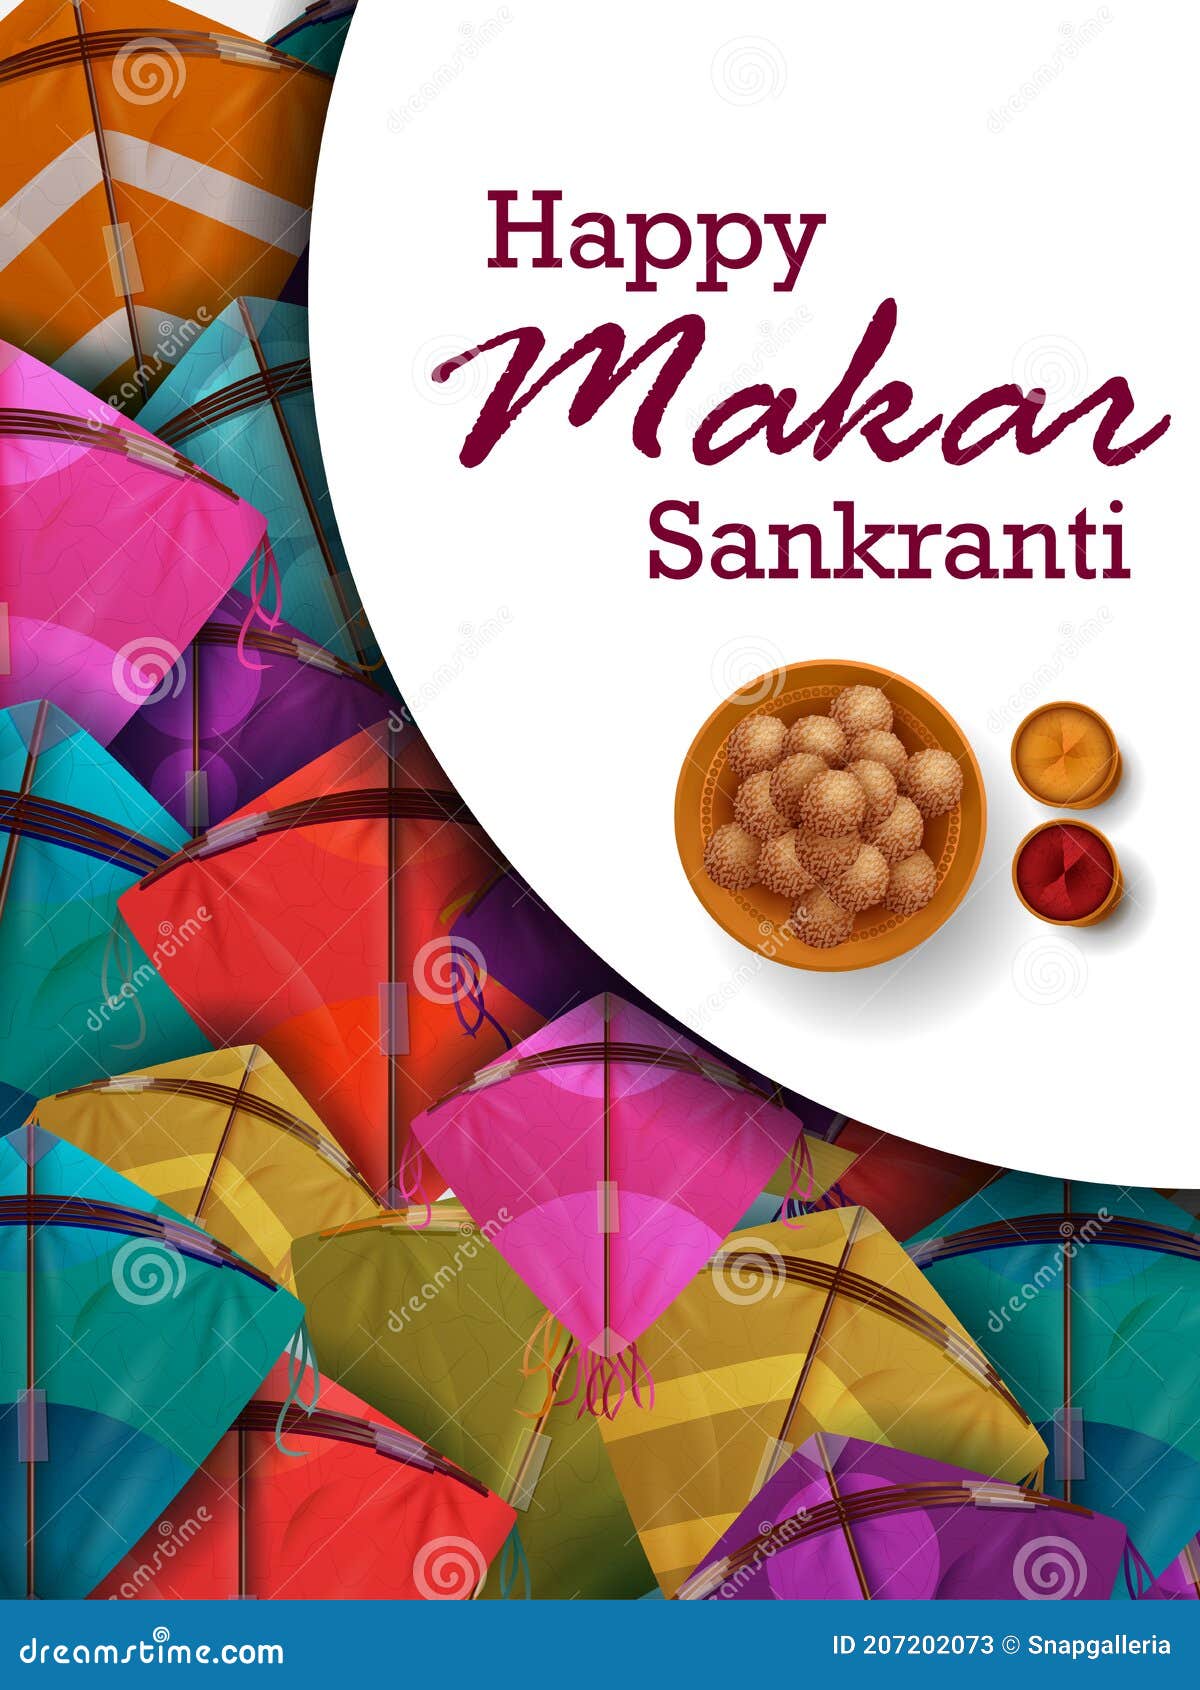 Happy Makar Sankranti Background with Colorful Kite Stock Image - Image of  devotion, makar: 207202073